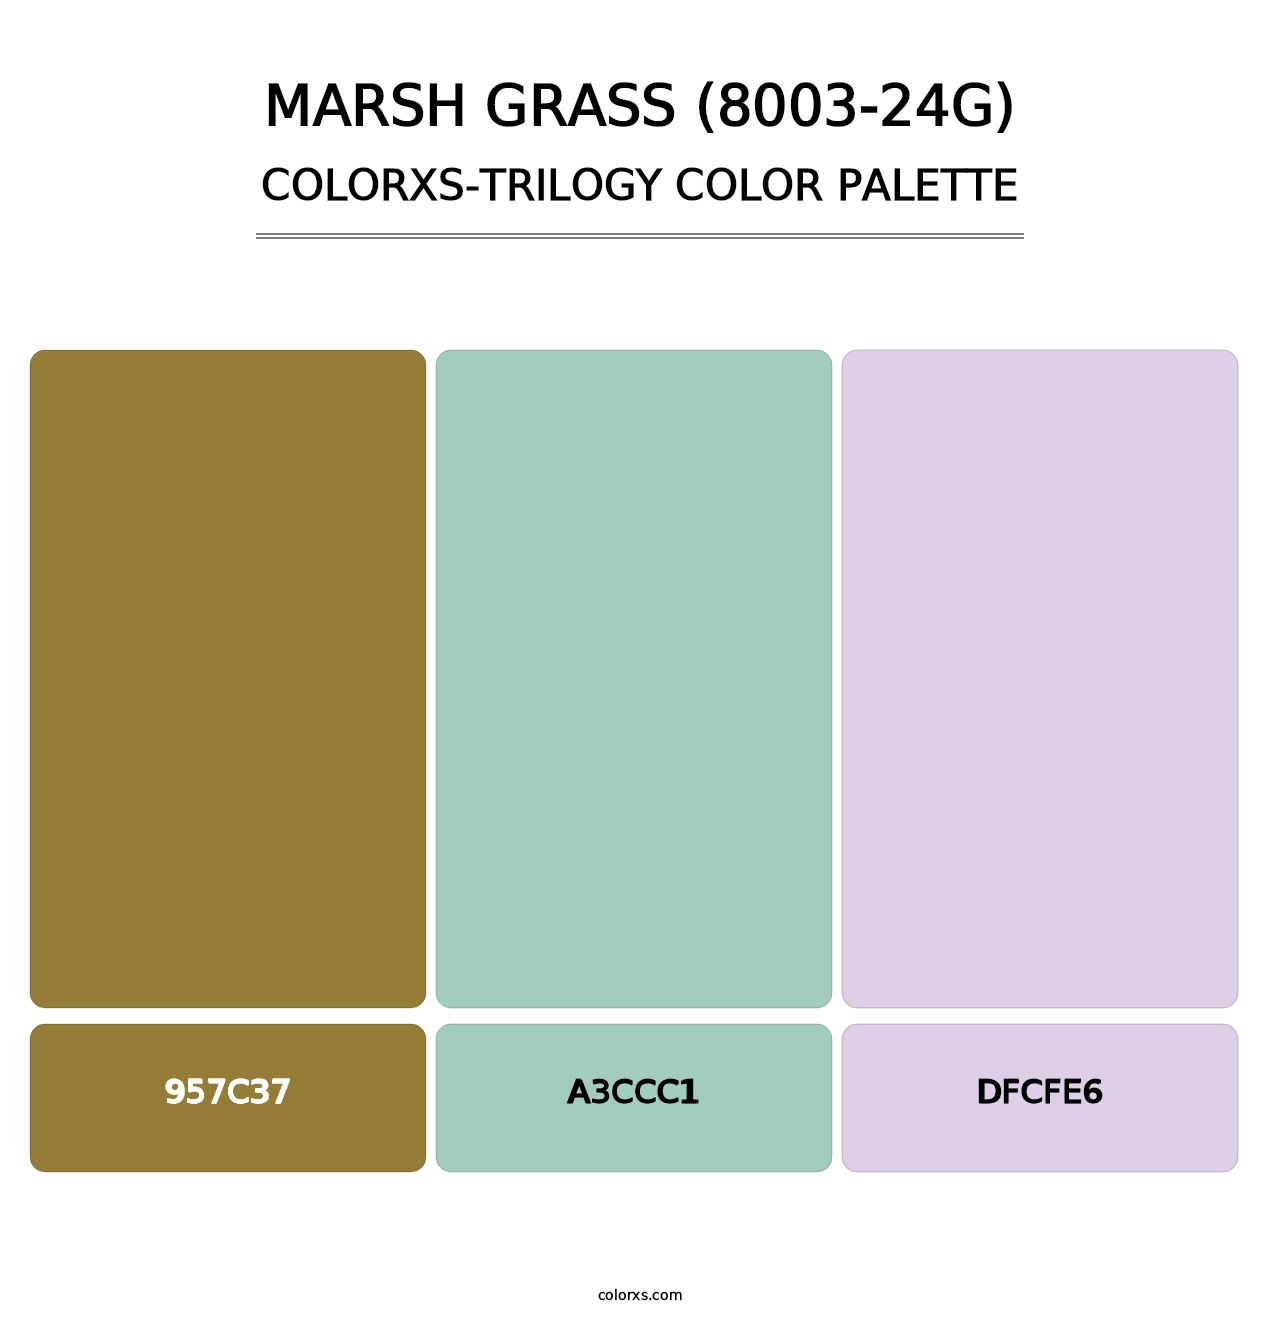 Marsh Grass (8003-24G) - Colorxs Trilogy Palette